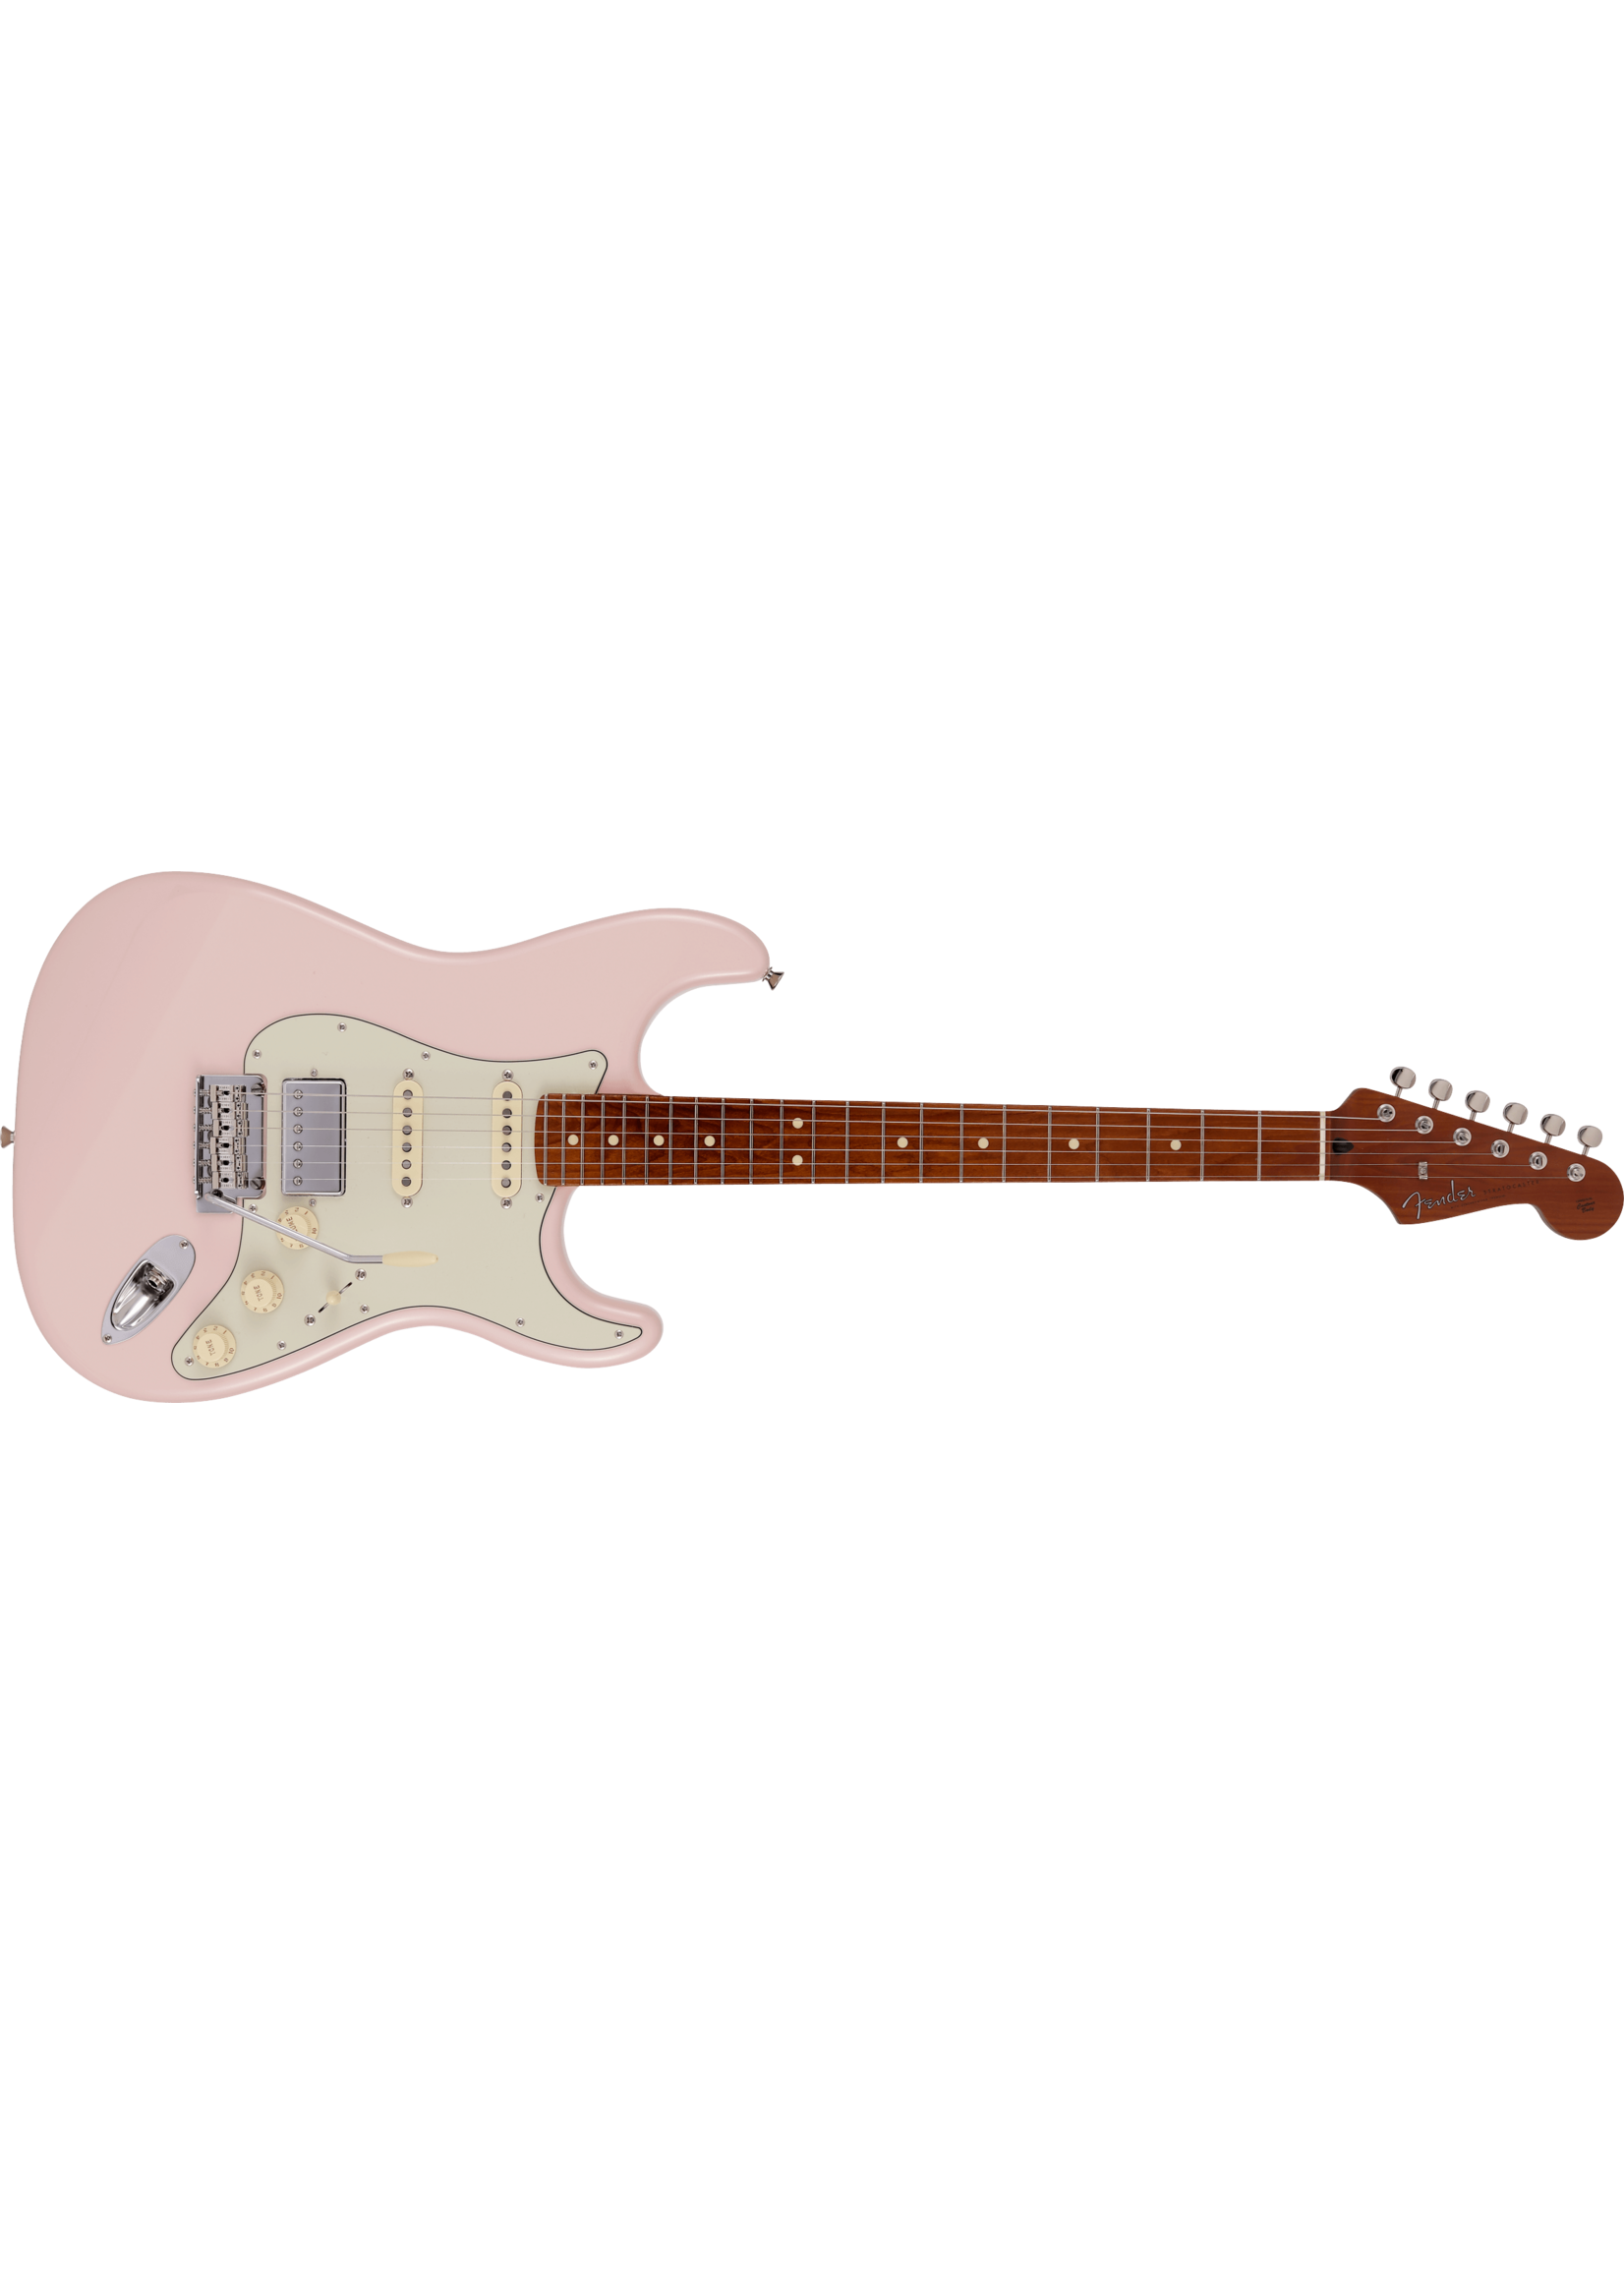 Fender Fender Made in Japan Hybrid II Stratocaster Shell Pink roasted maple neck